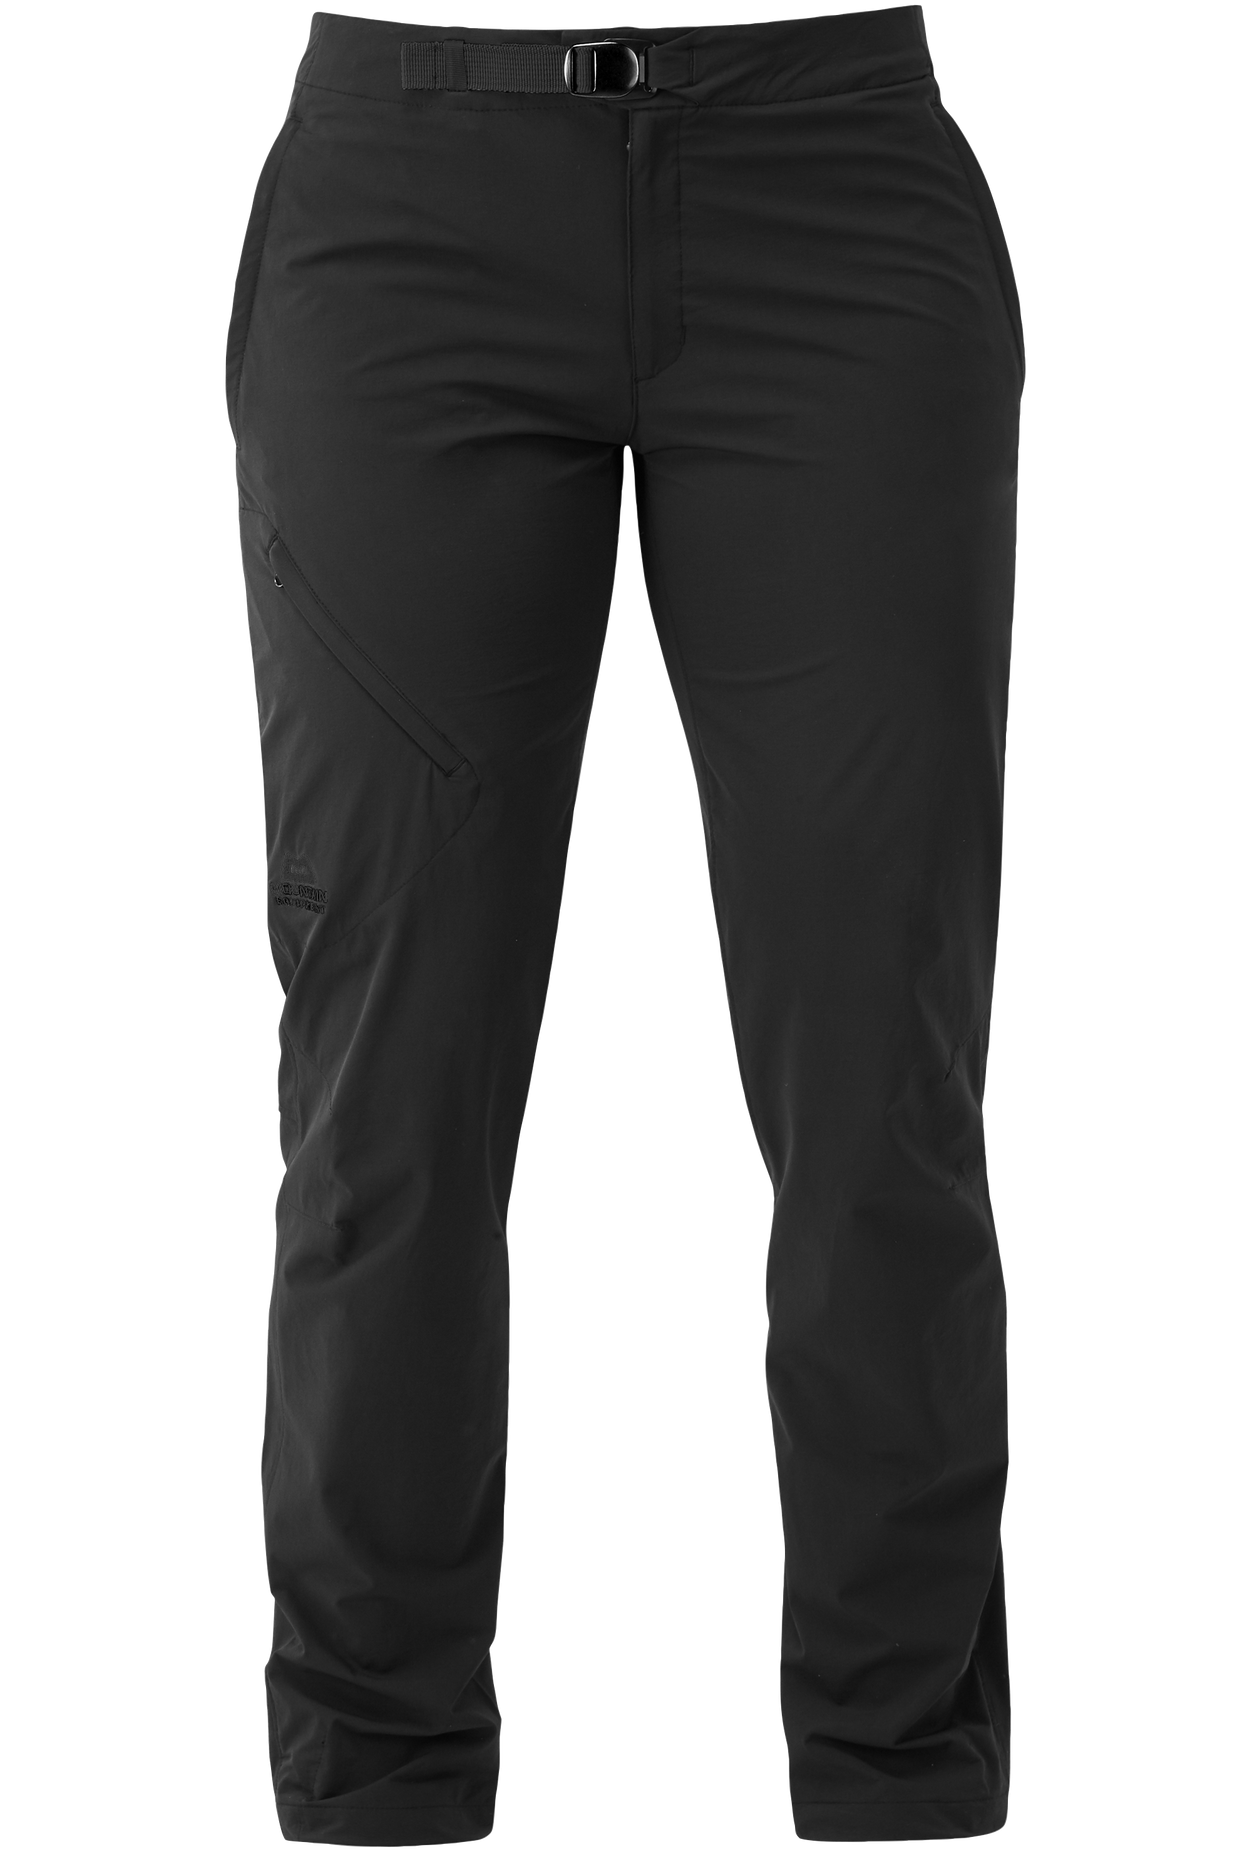 Mountain Equipment dámské softshellové kalhoty Comici Wmns Pant - zkrácené Barva: black/black, Velikost: 12/M